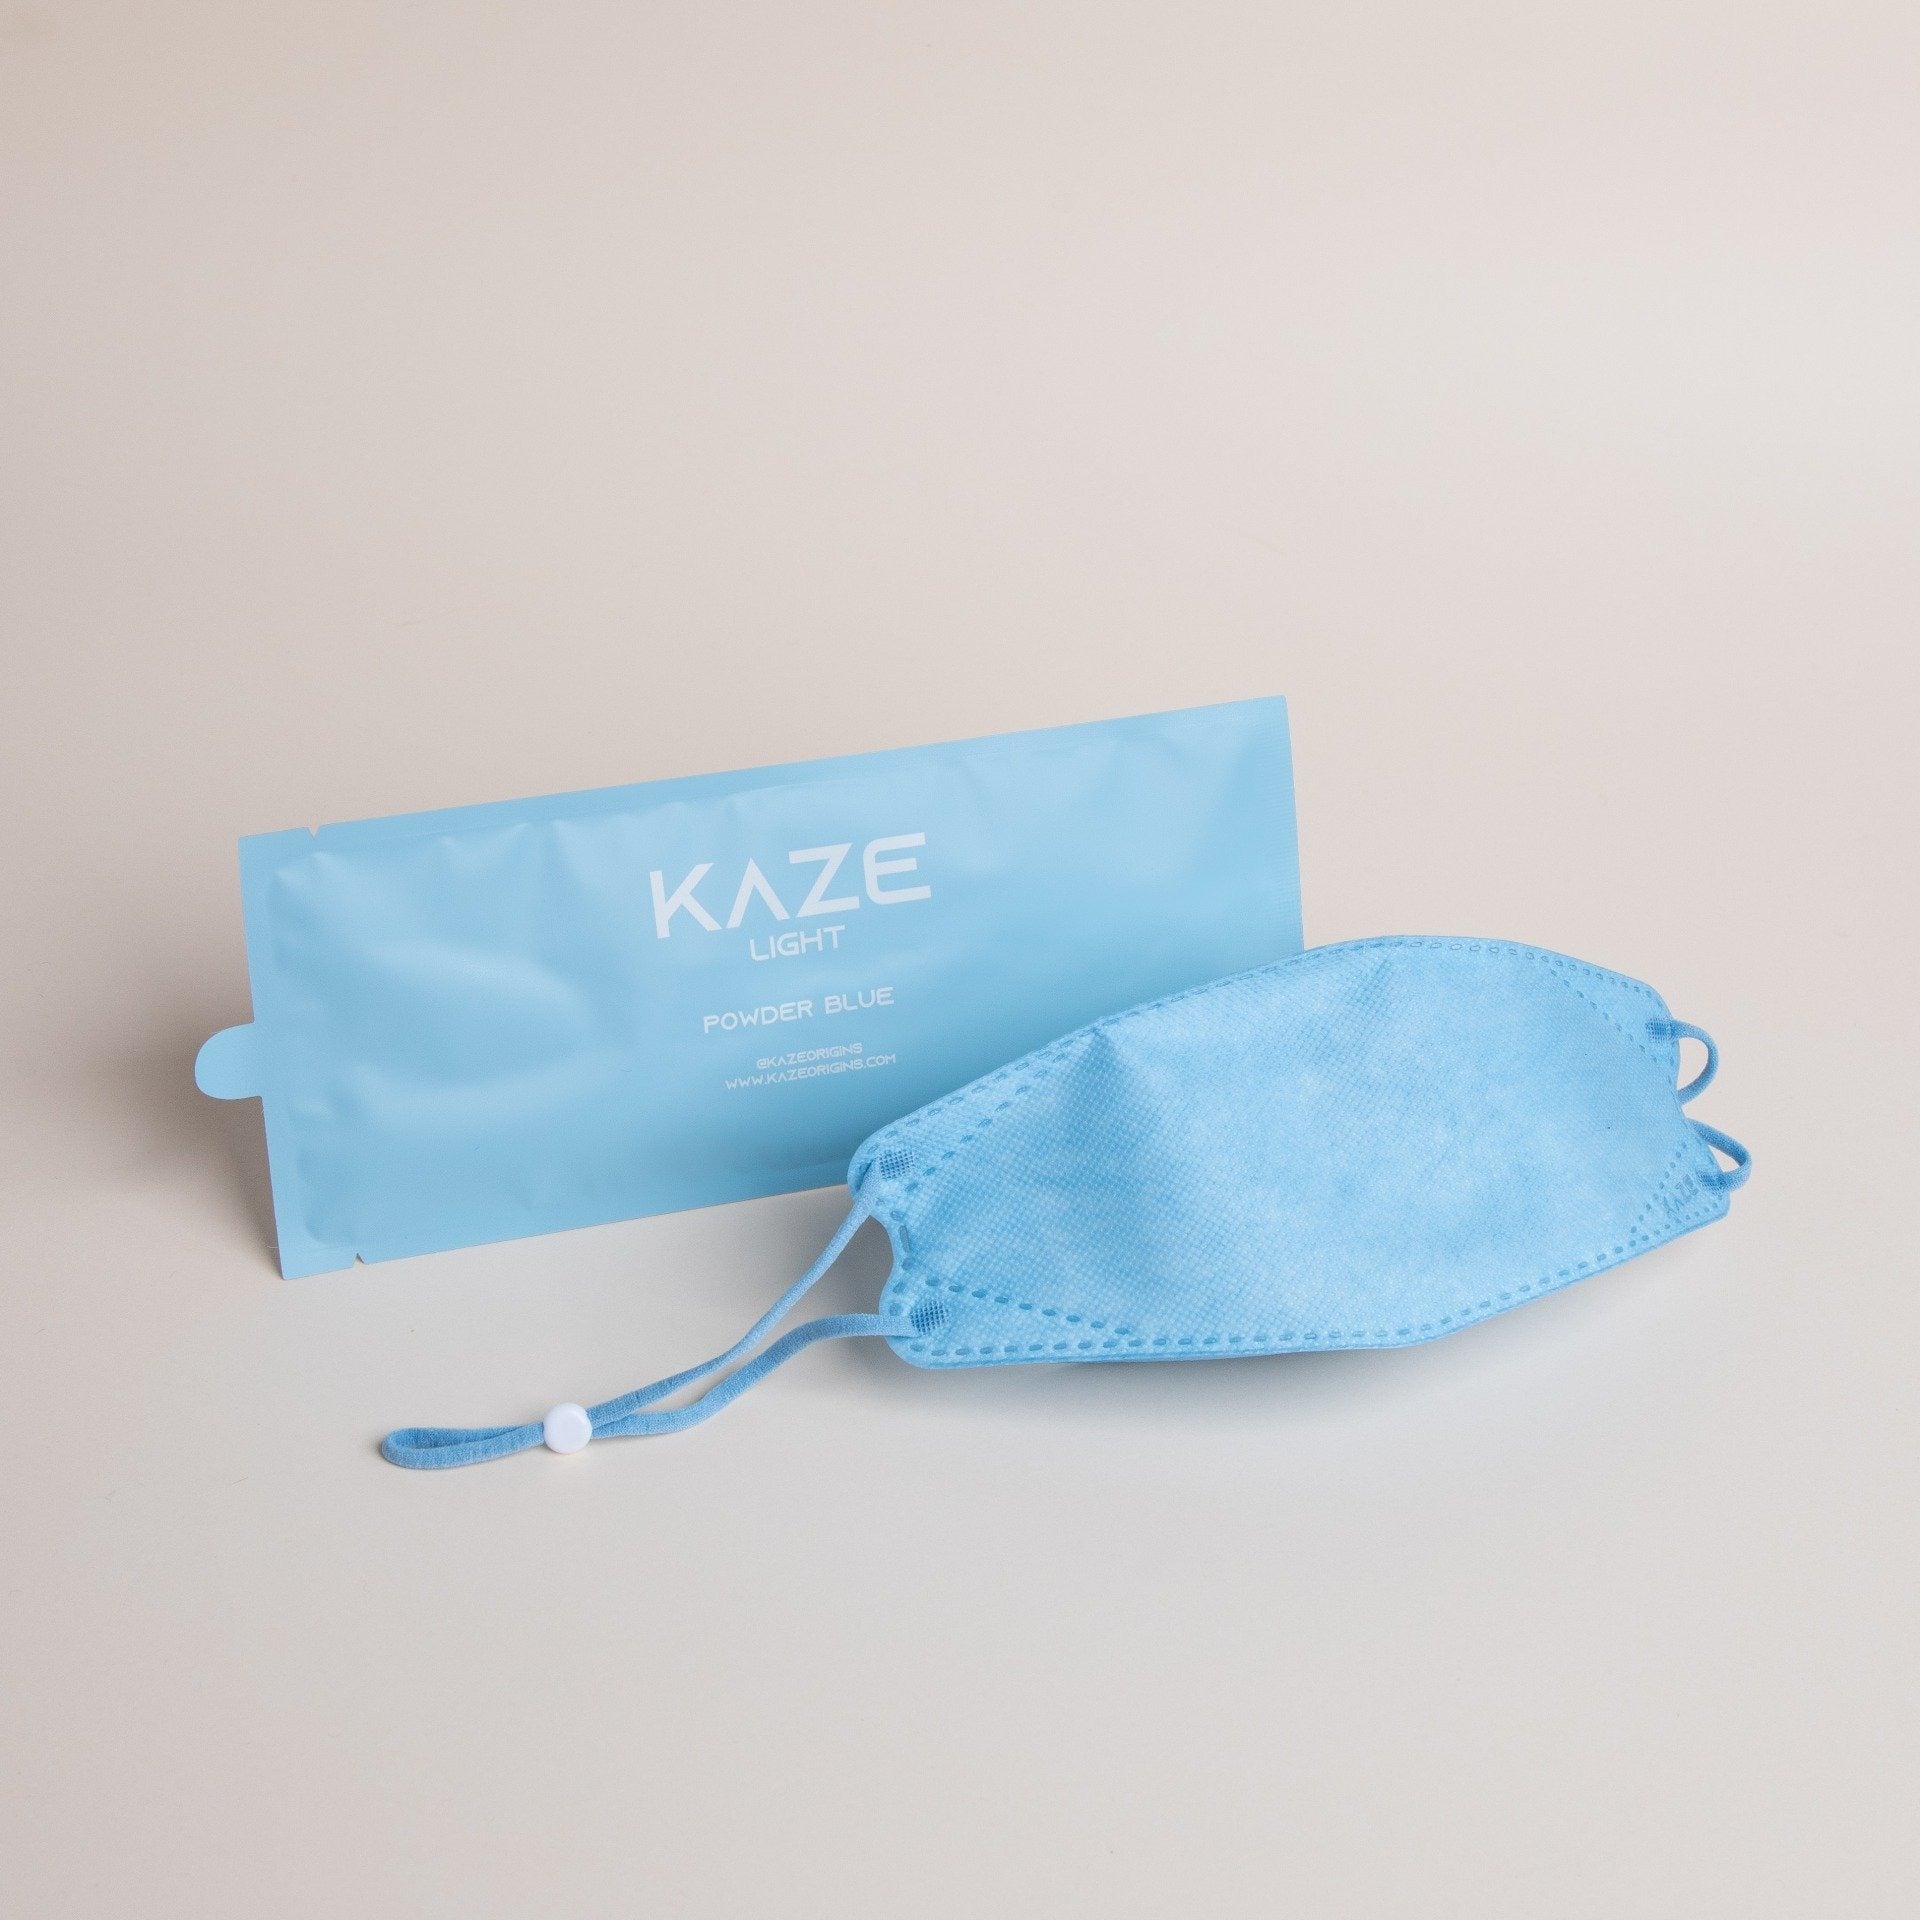 KAZE Light - Collections – KazeOrigins